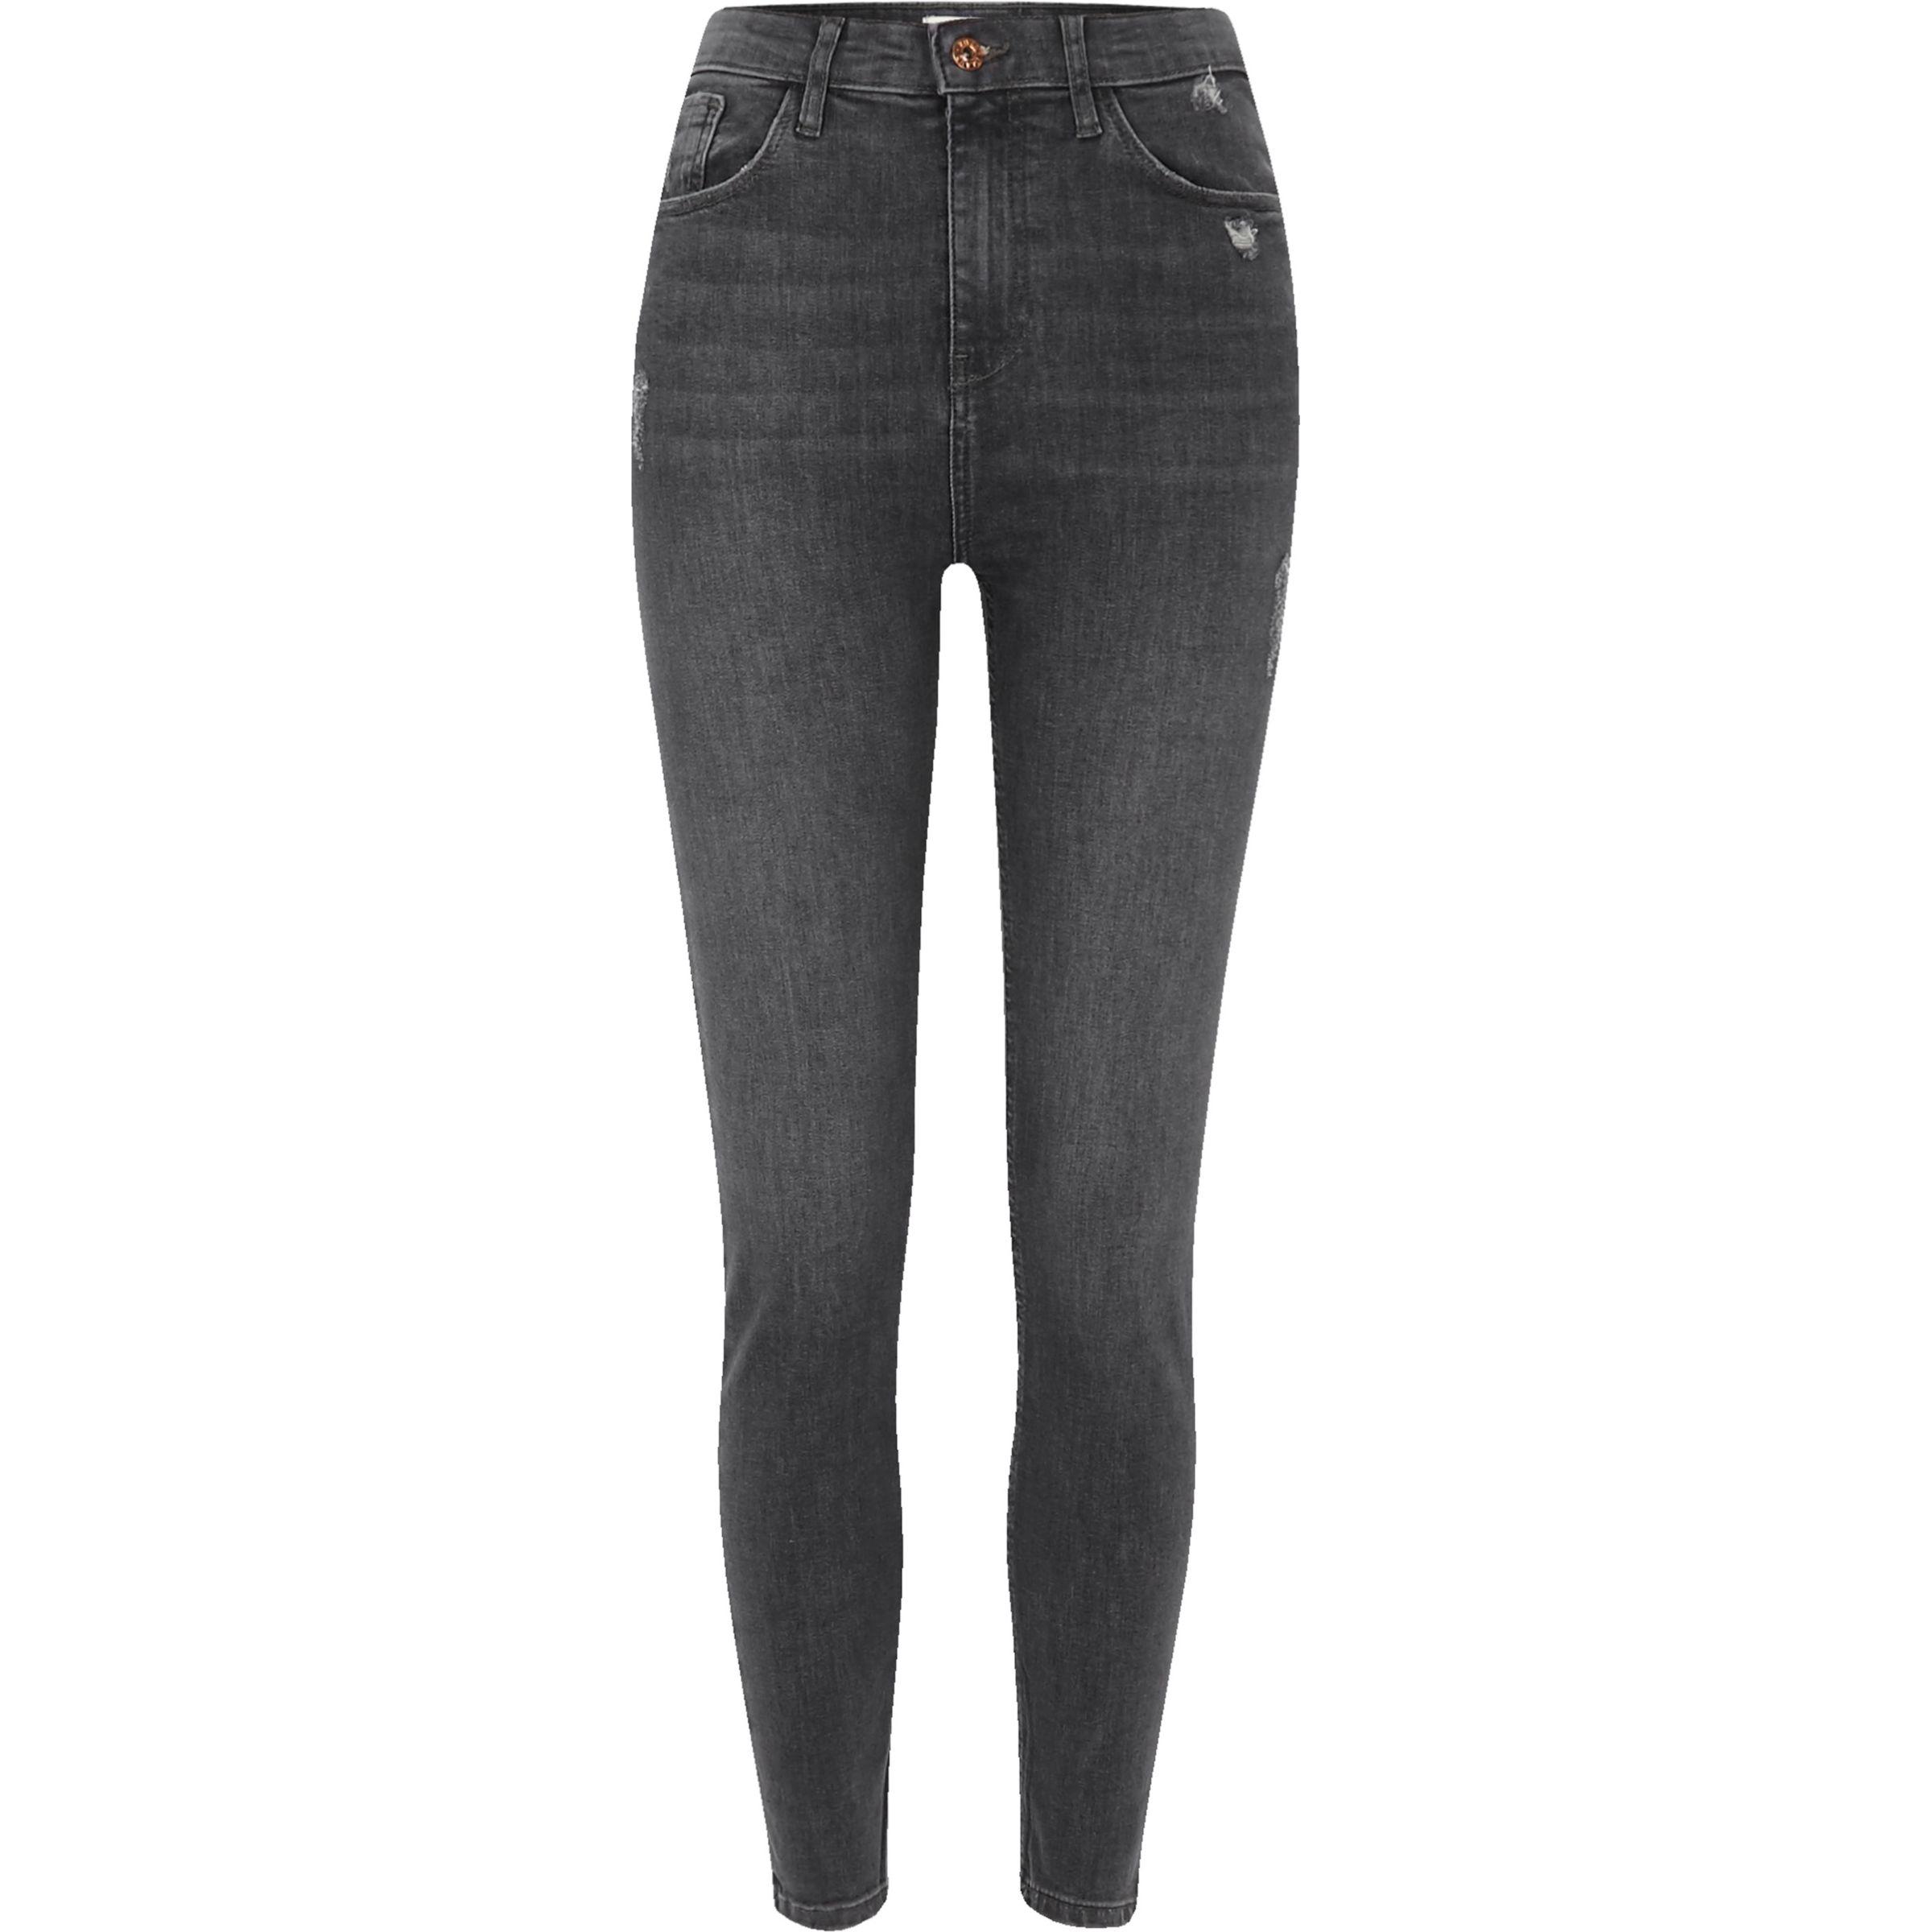 dark gray high waisted jeans